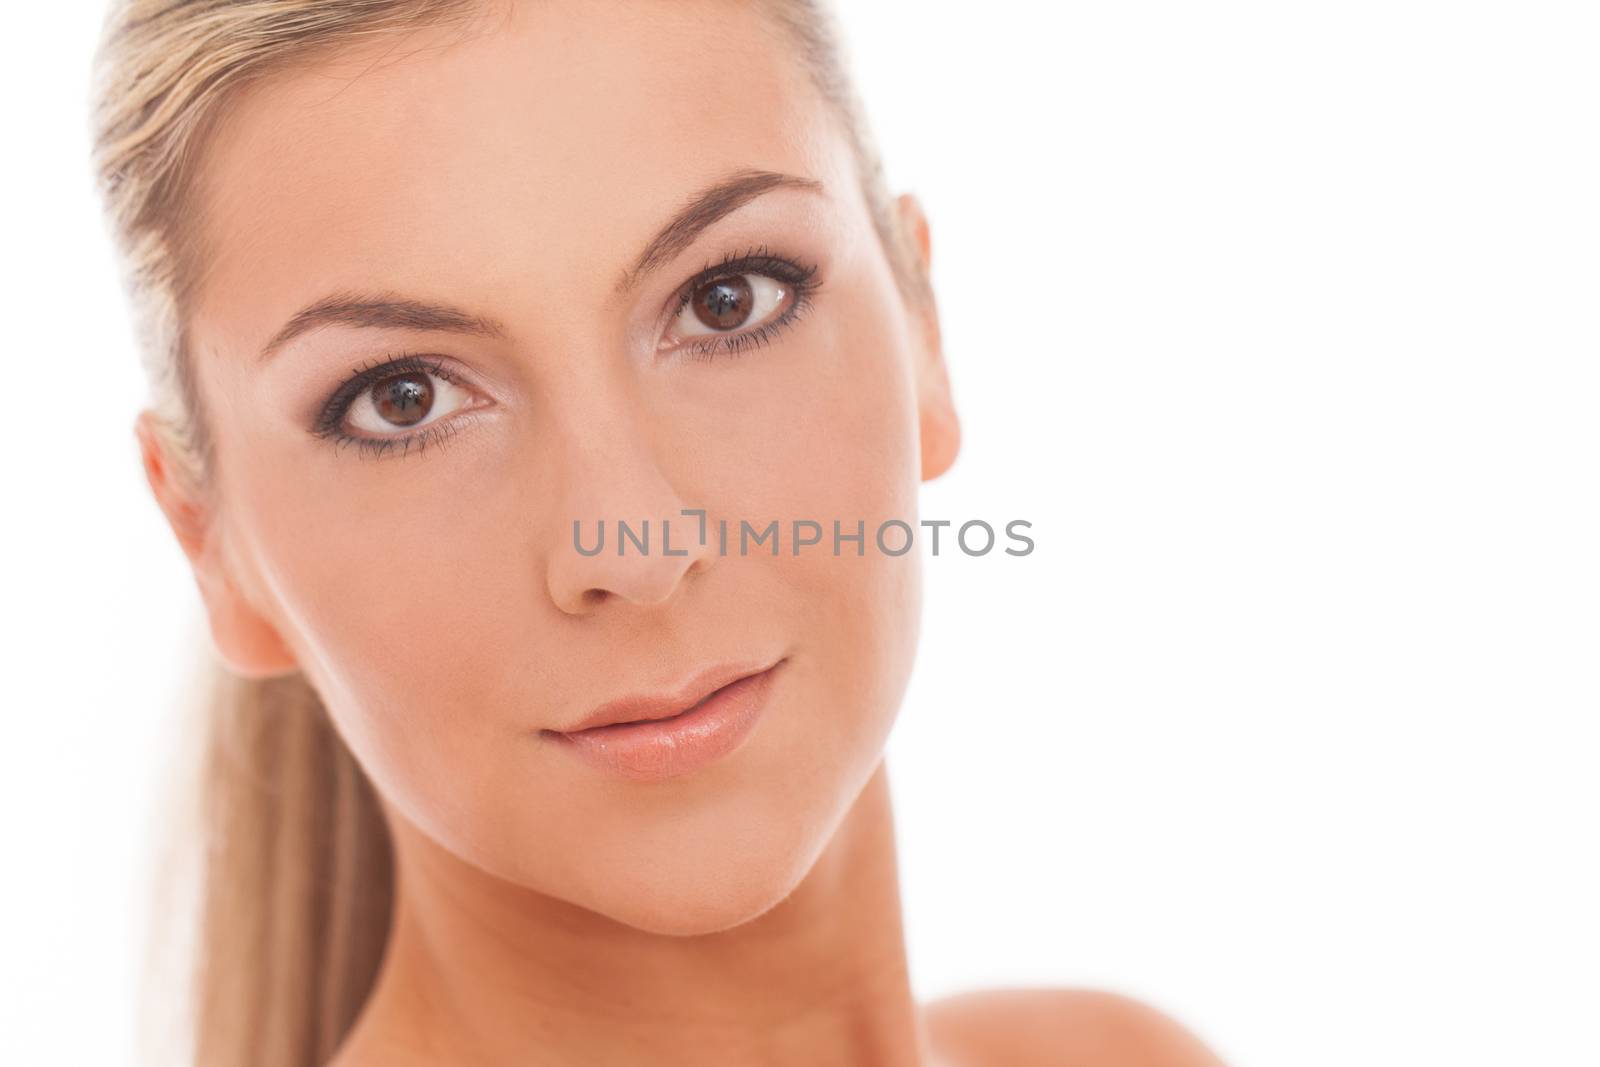 Closeup portrait of woman with day makeup by rufatjumali